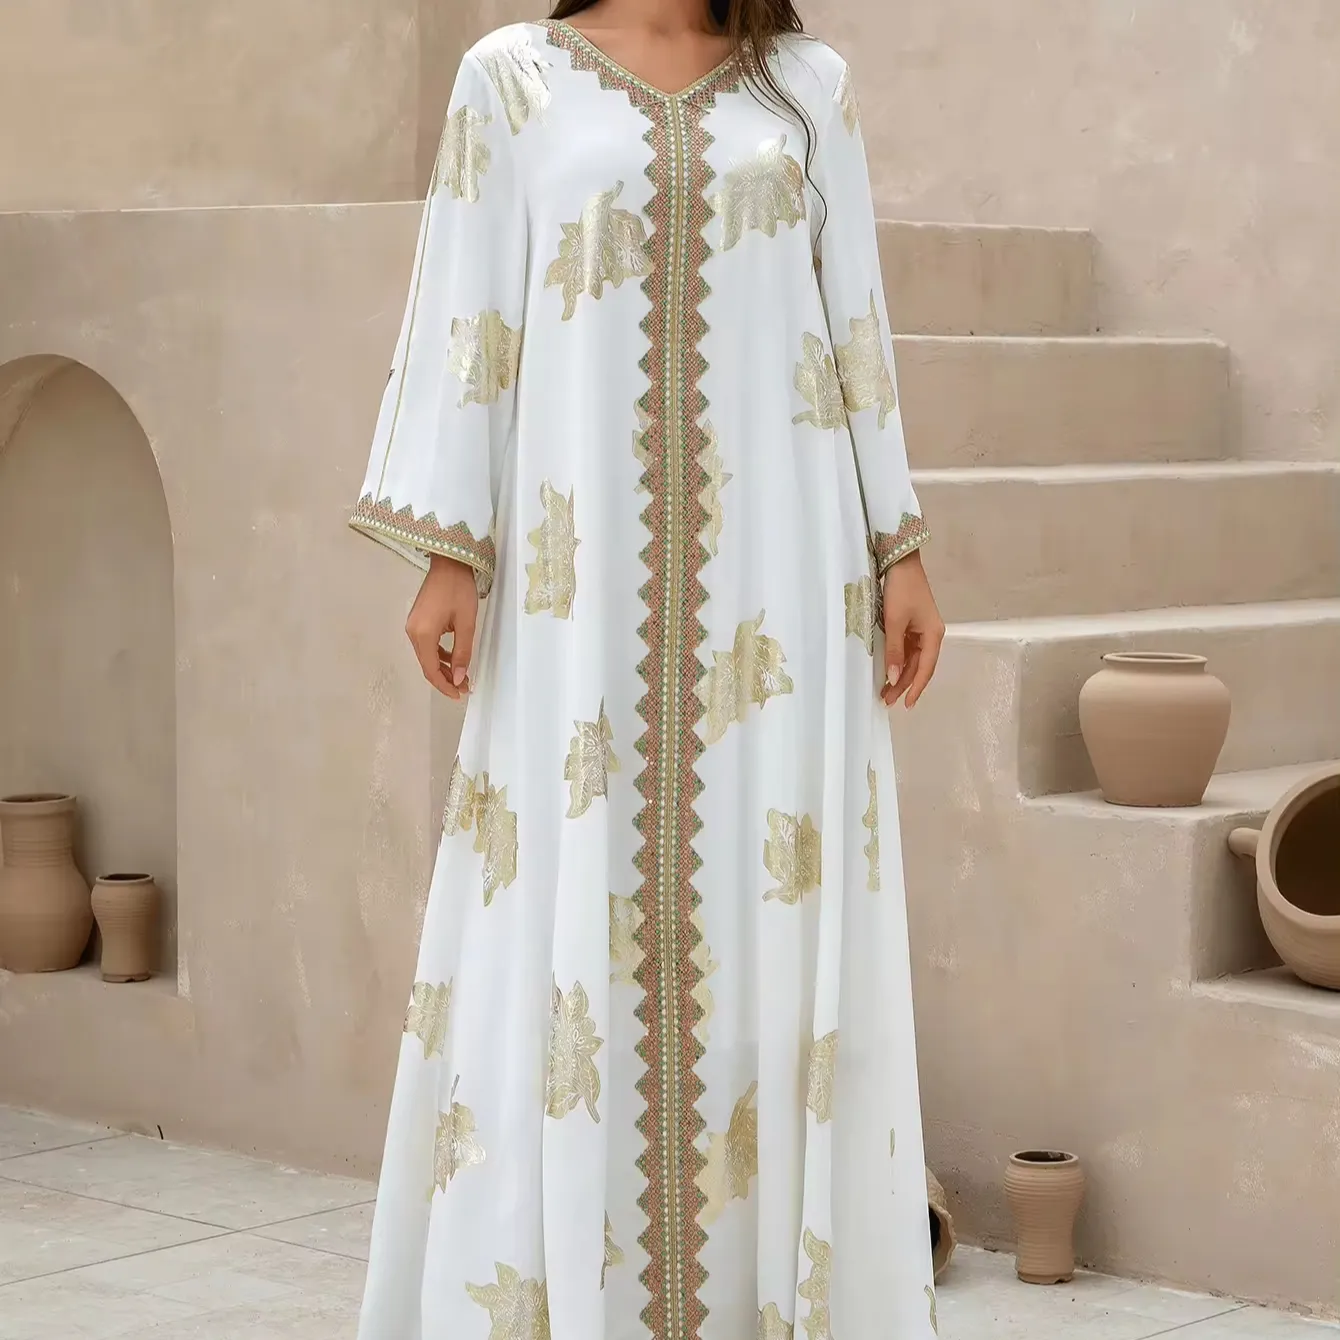 2023 Hot New Islamic Muslim Fashion Style Dubai Dresses Women's Middle East Arabic Stamping Embroidery Muslim Dresses